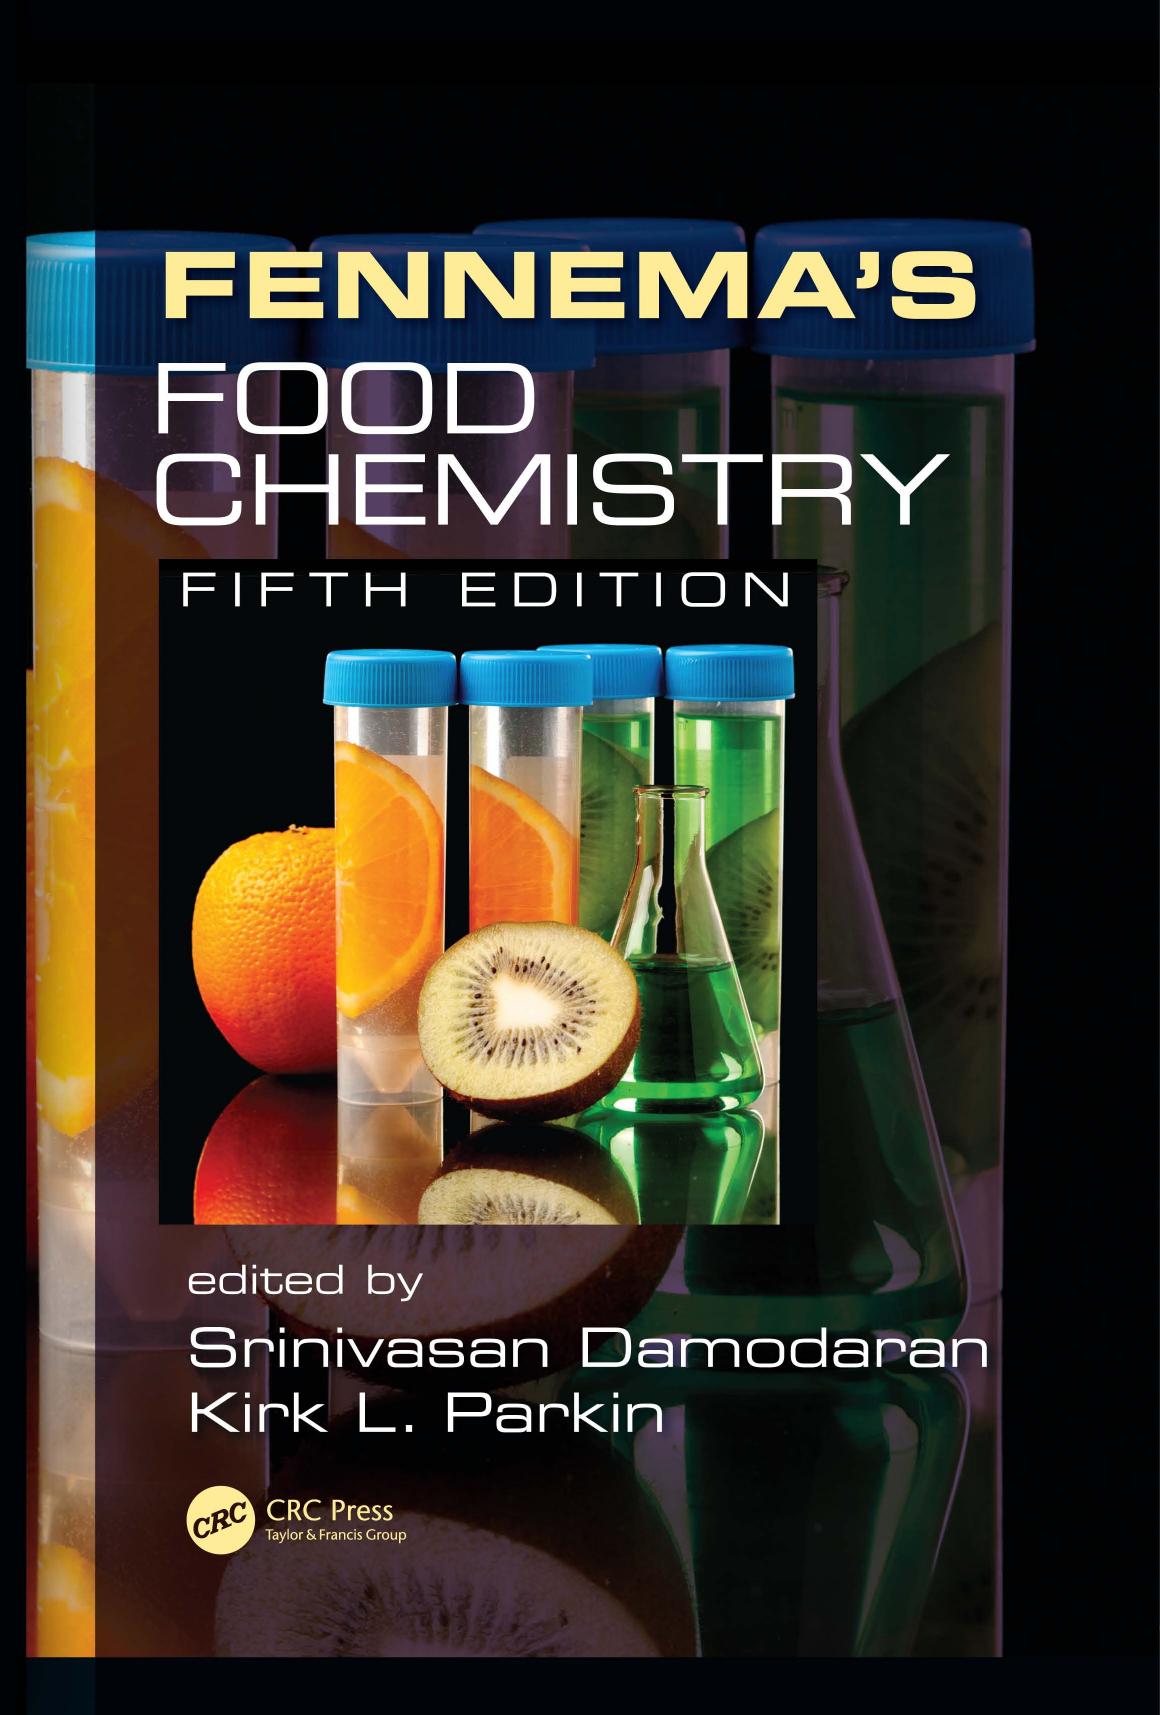 Fennema's Food Chemistry, 5th Edition - Srinivasan Damodaran, Kirk L. Parkin.jpg